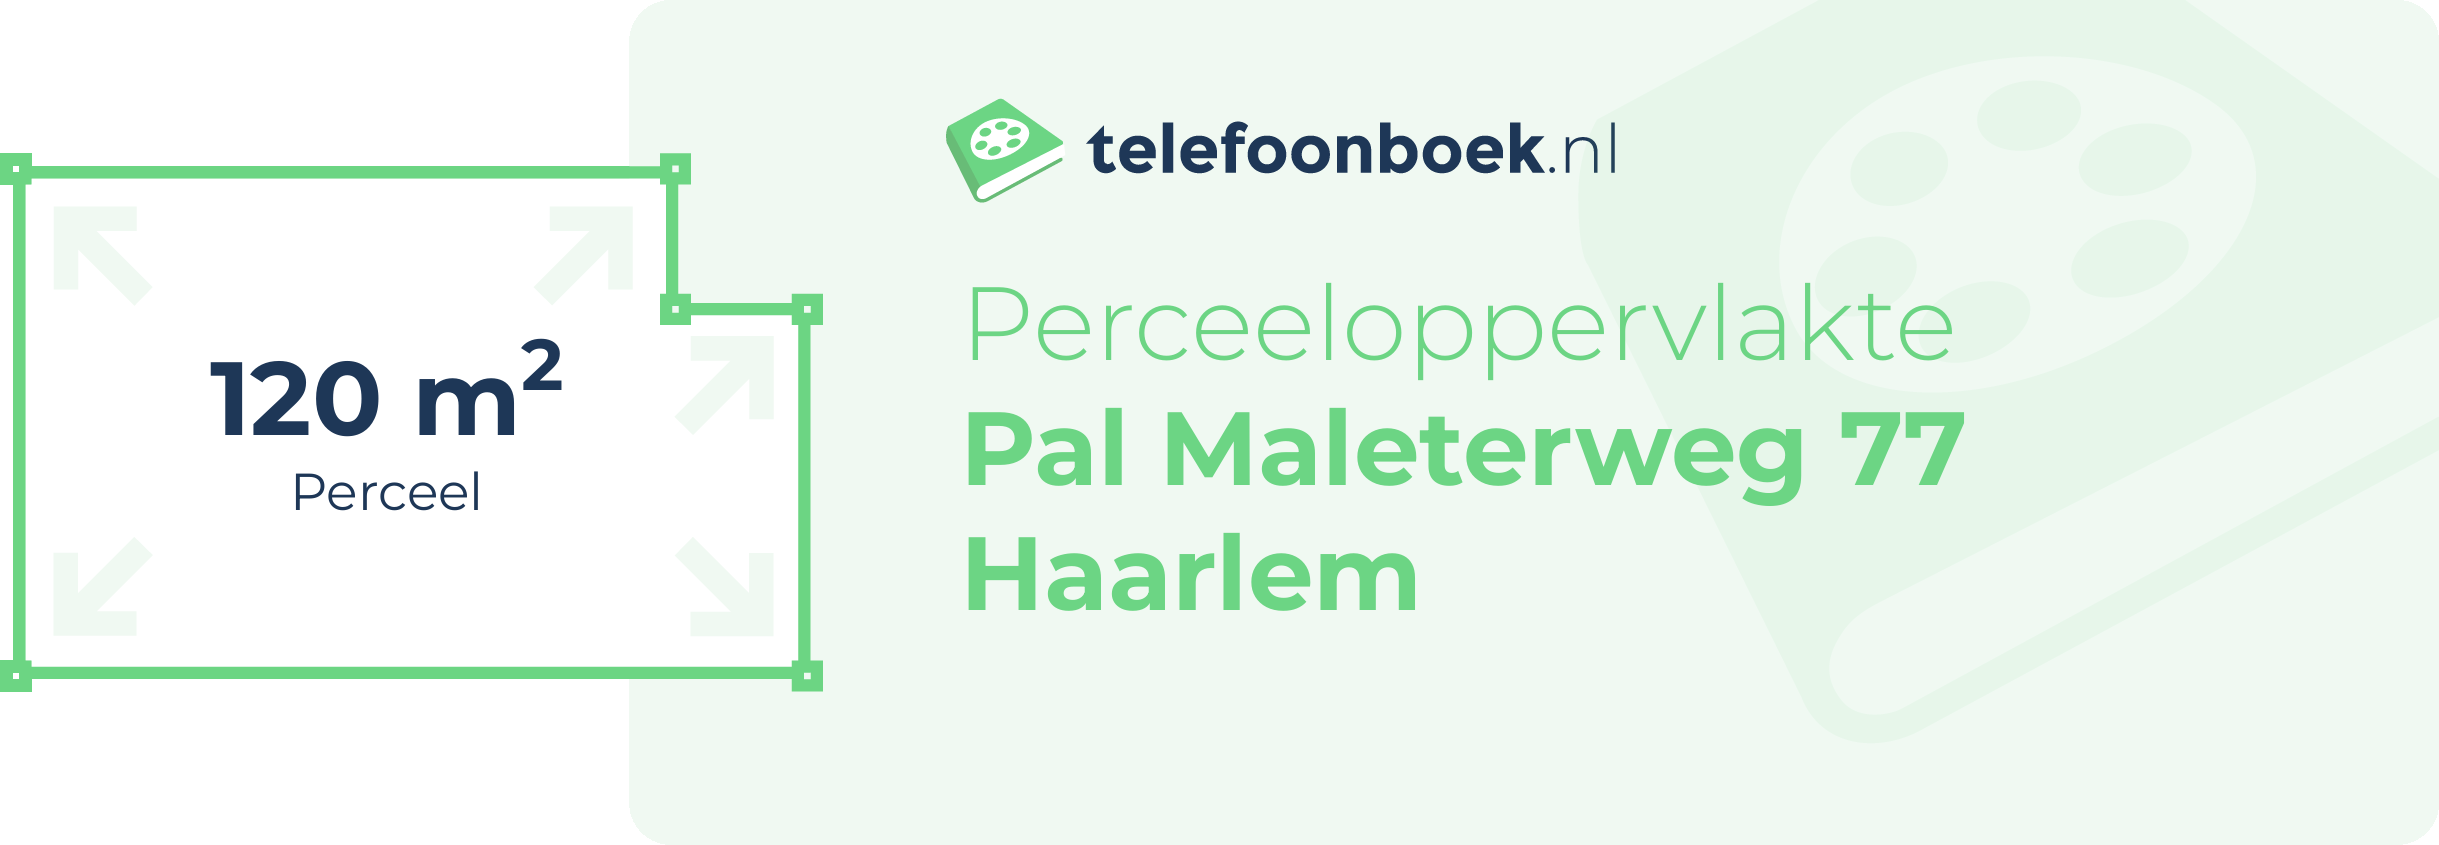 Perceeloppervlakte Pal Maleterweg 77 Haarlem